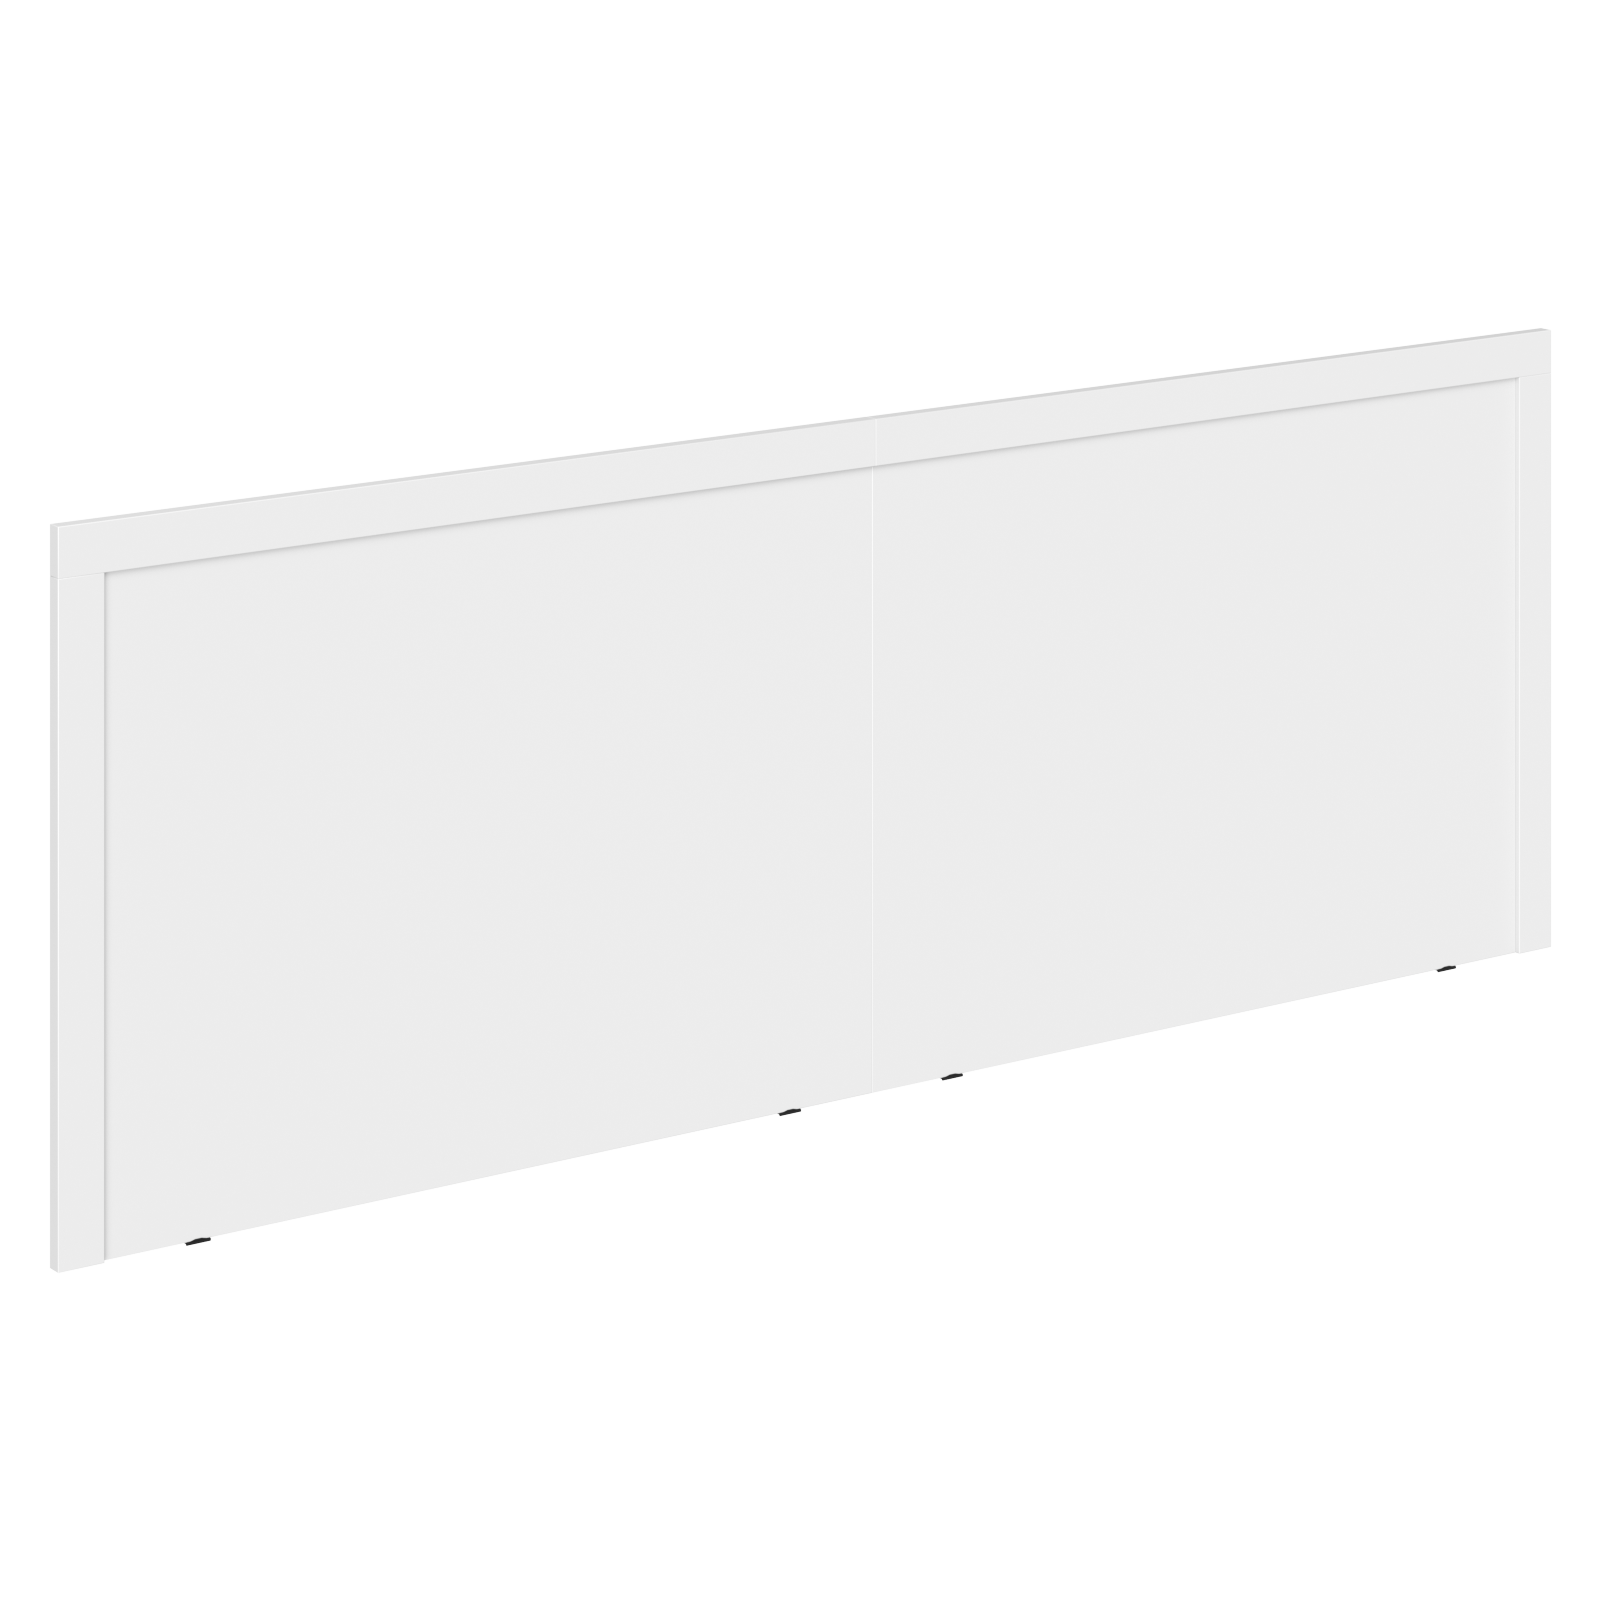 Изголовье напольное к кровати "Kann" Skyland, (2700х25х1000 мм), (арт. KPS 1627), Белый